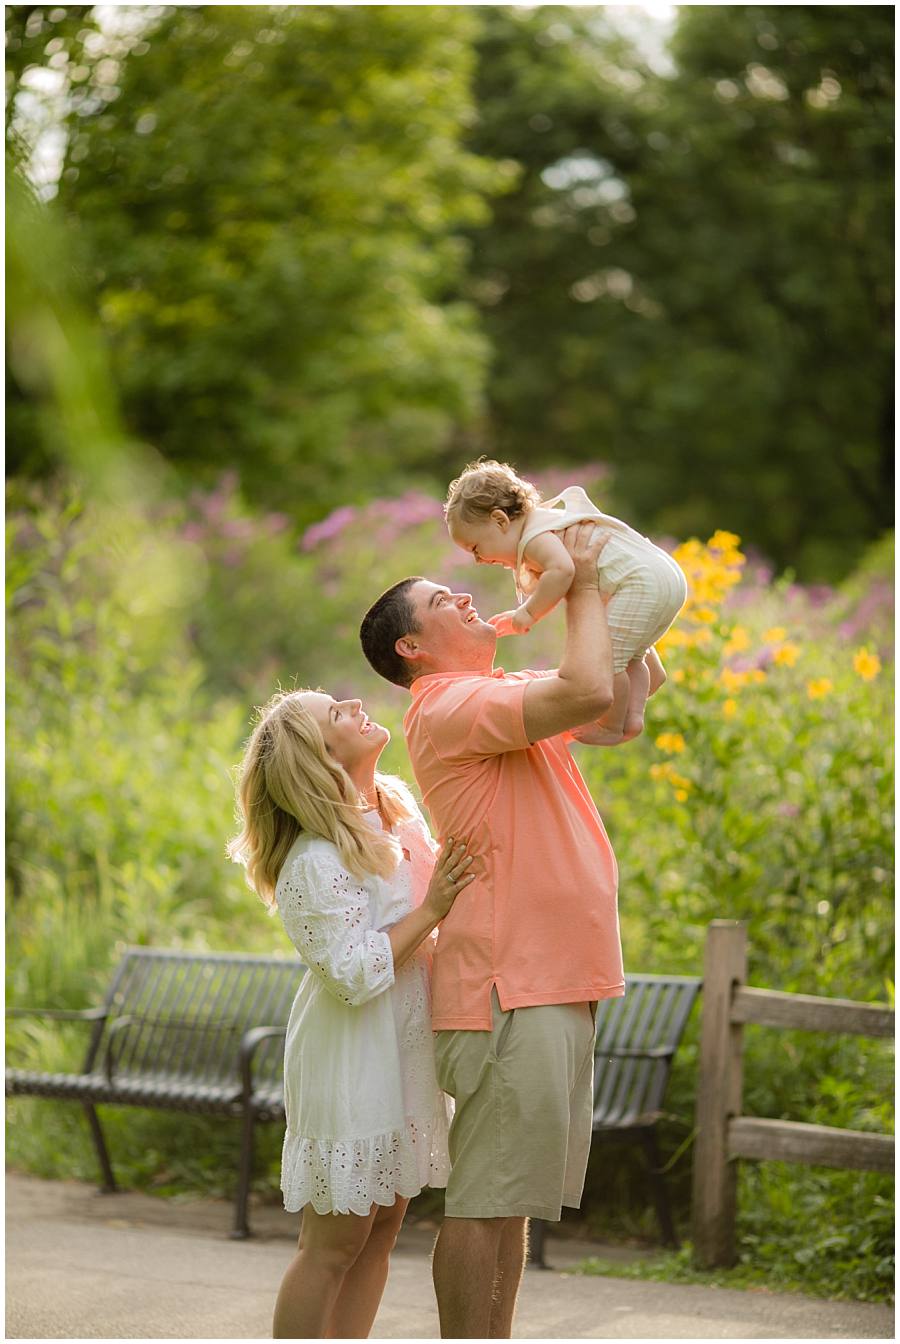 Chicago Family Photographer at Winnemac Park in Summer